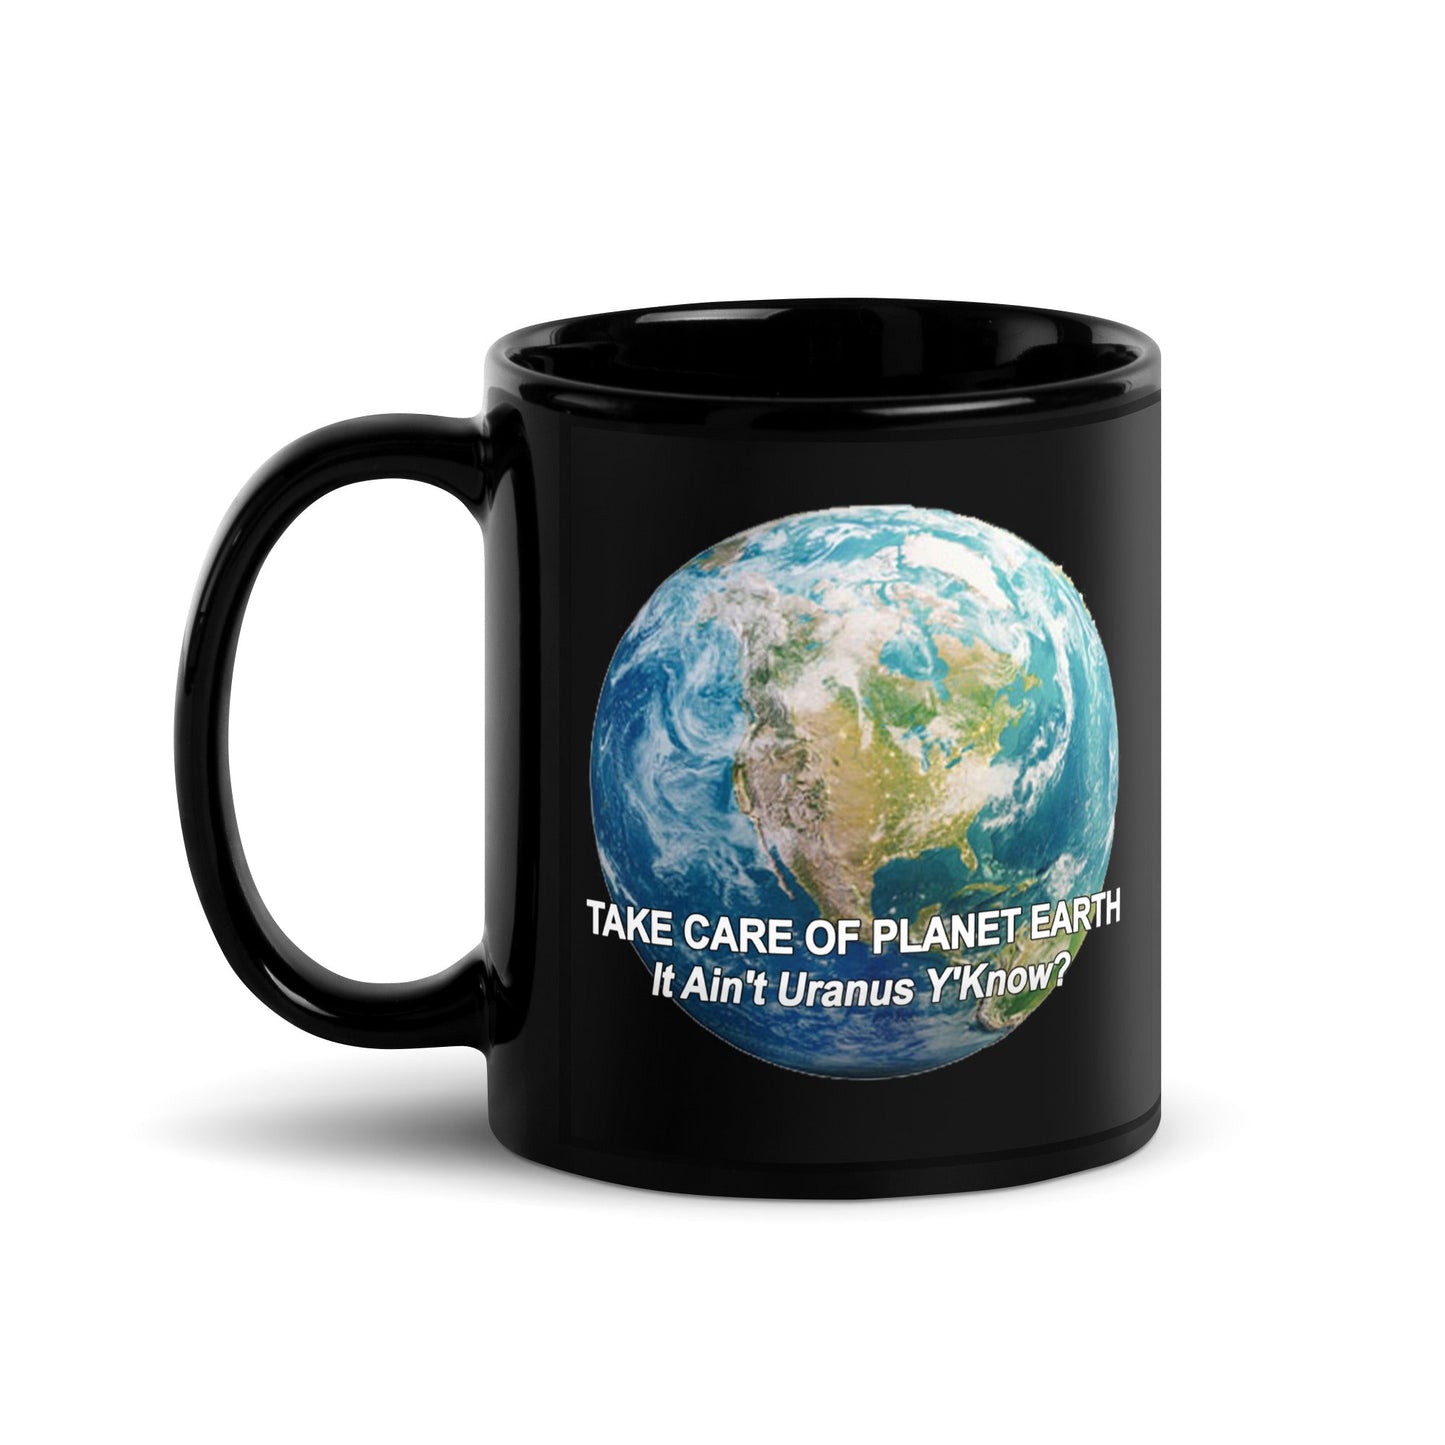 Take Care of Planet Earth. It's Not Uranus Y'Know - Black Ceramic Glossy Mug